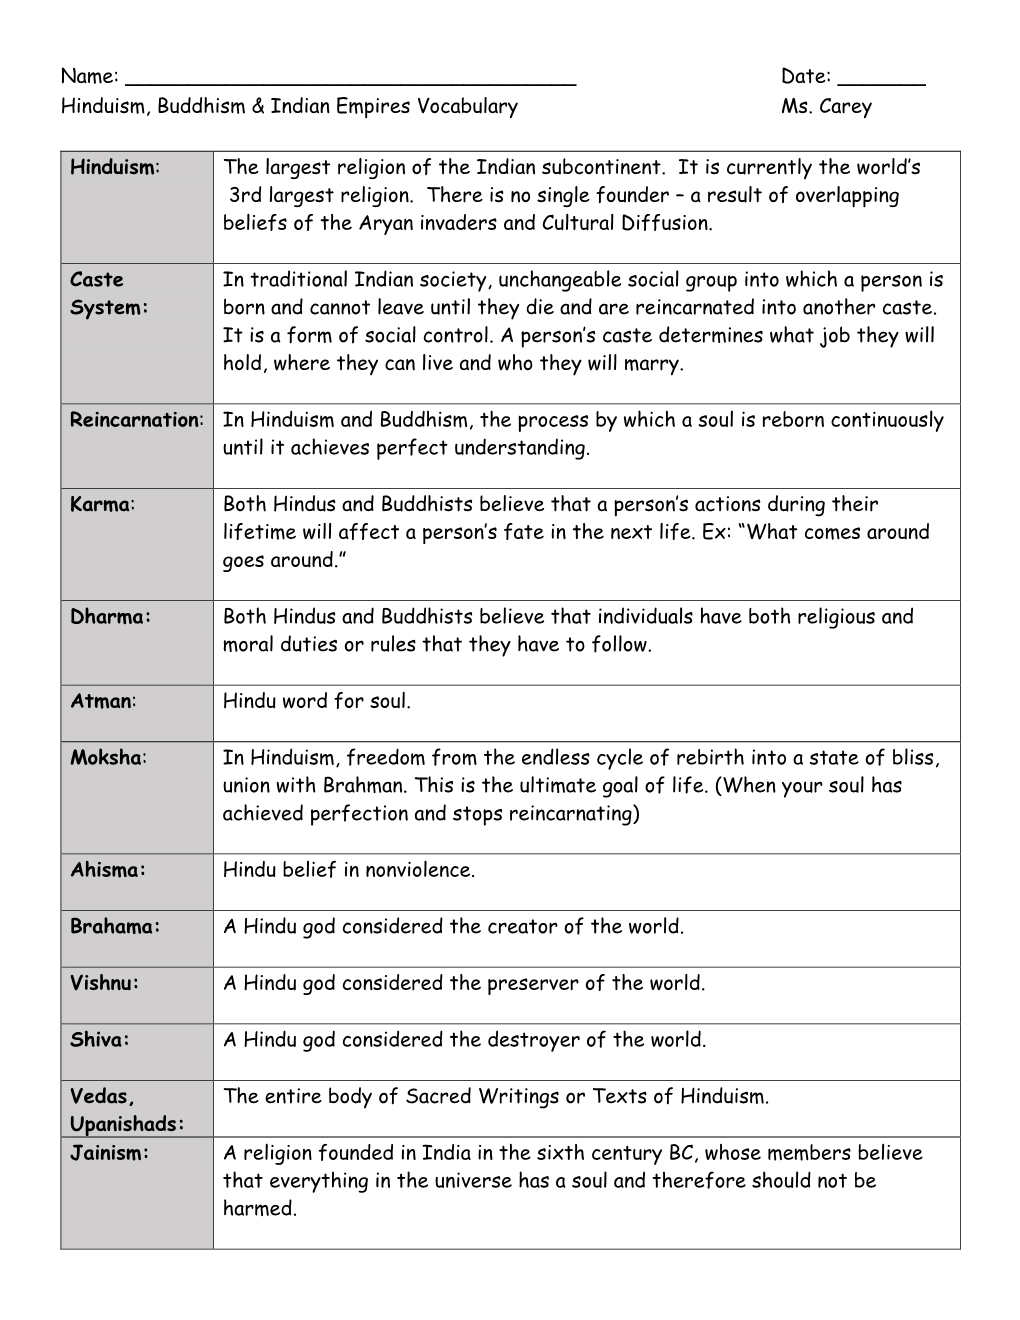 Hinduism/Buddhism Vocabulary